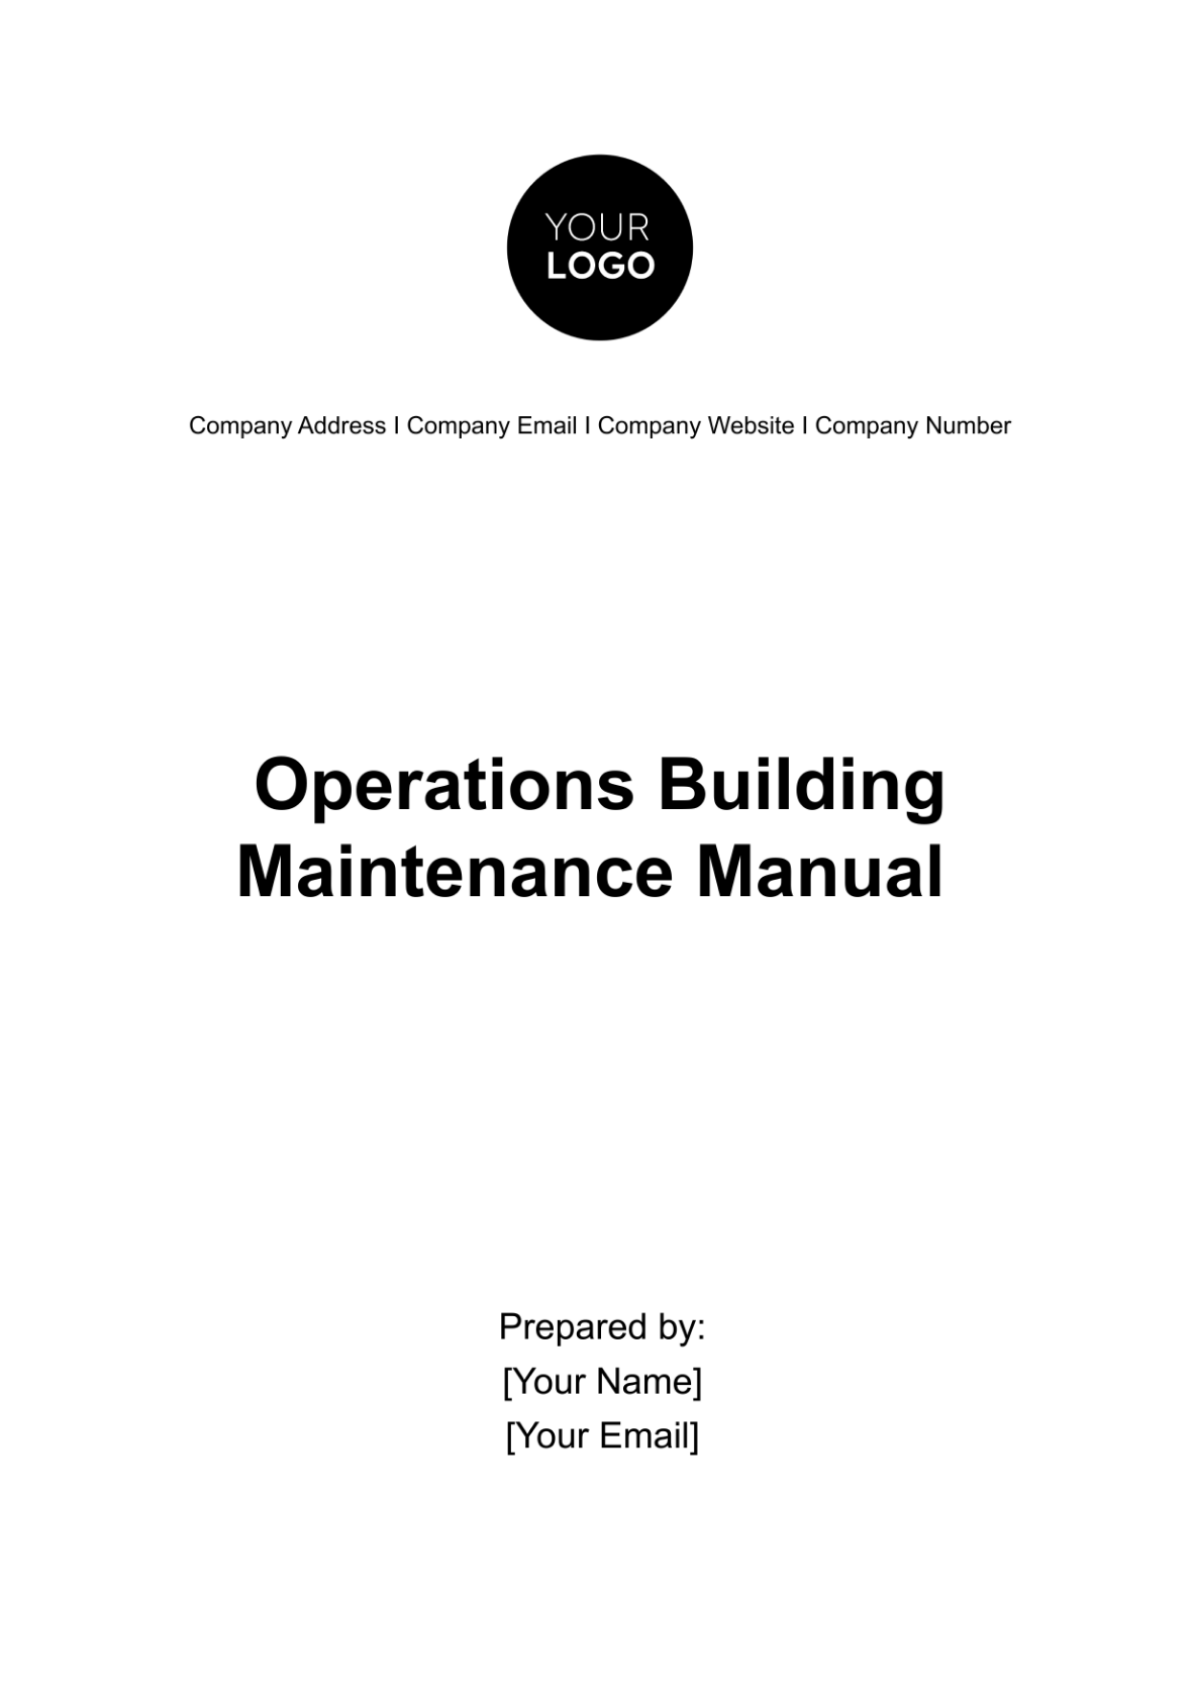 Operations Building Maintenance Manual Template